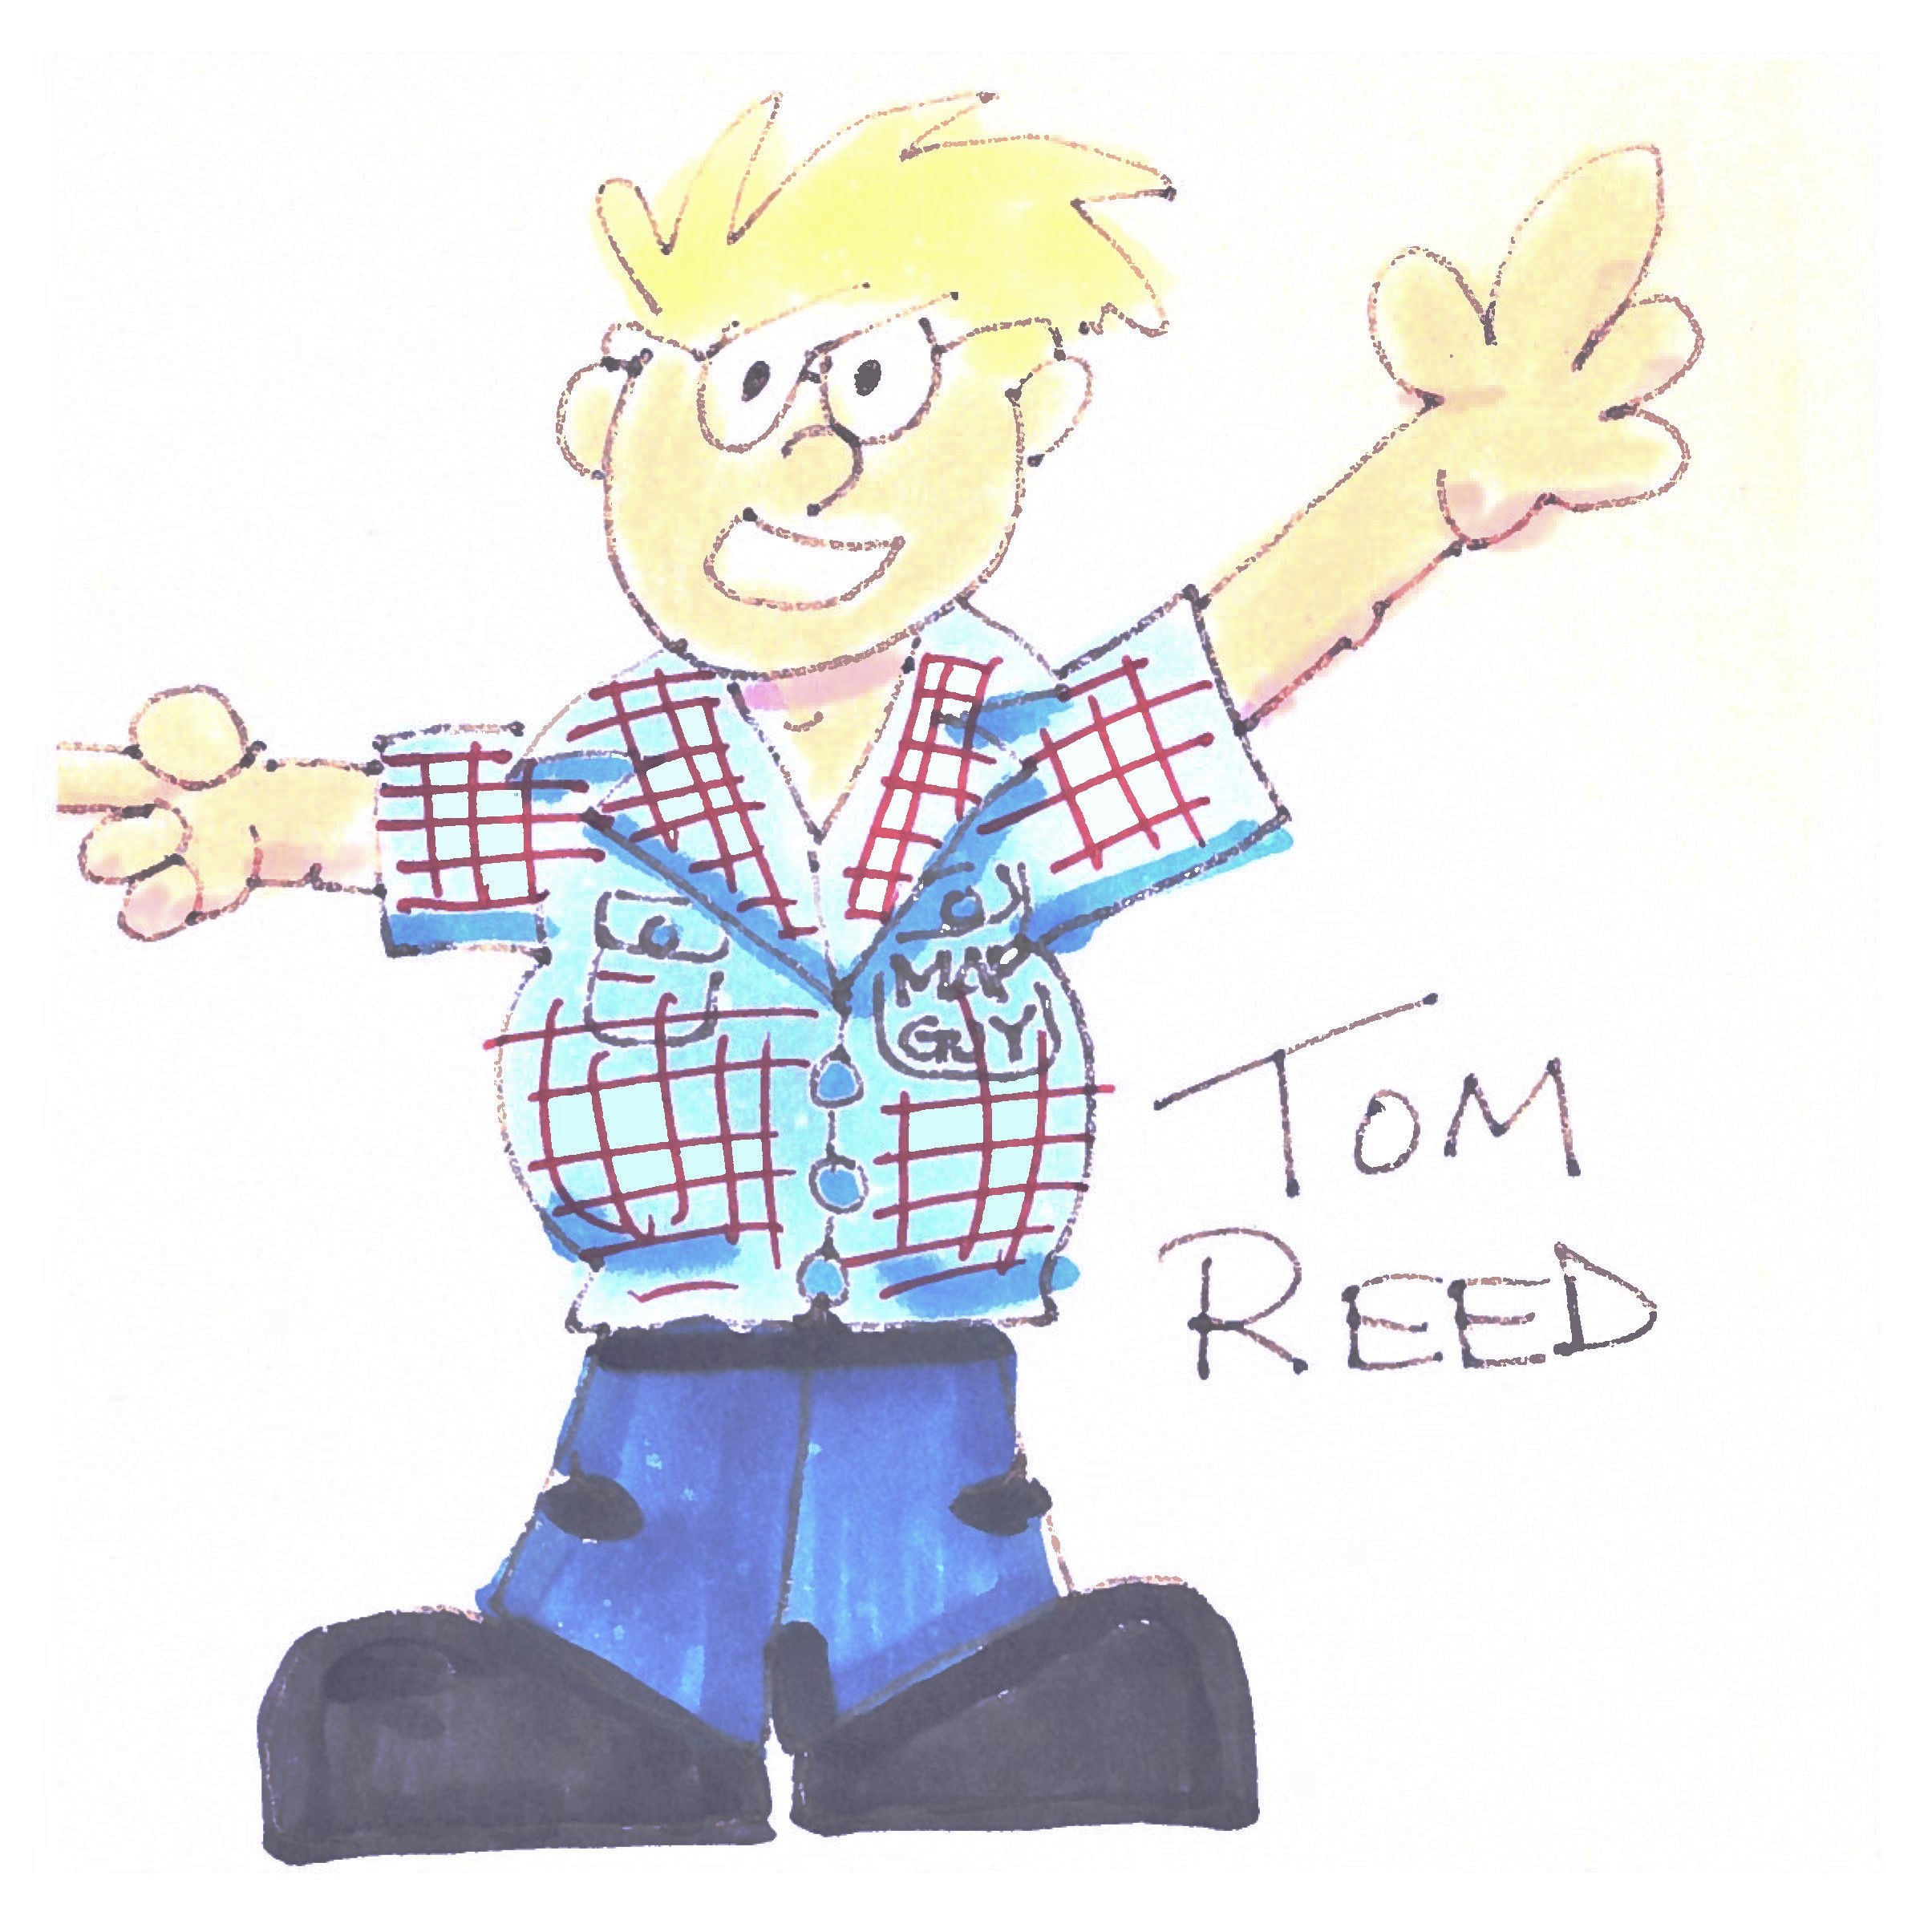 Tom Reed